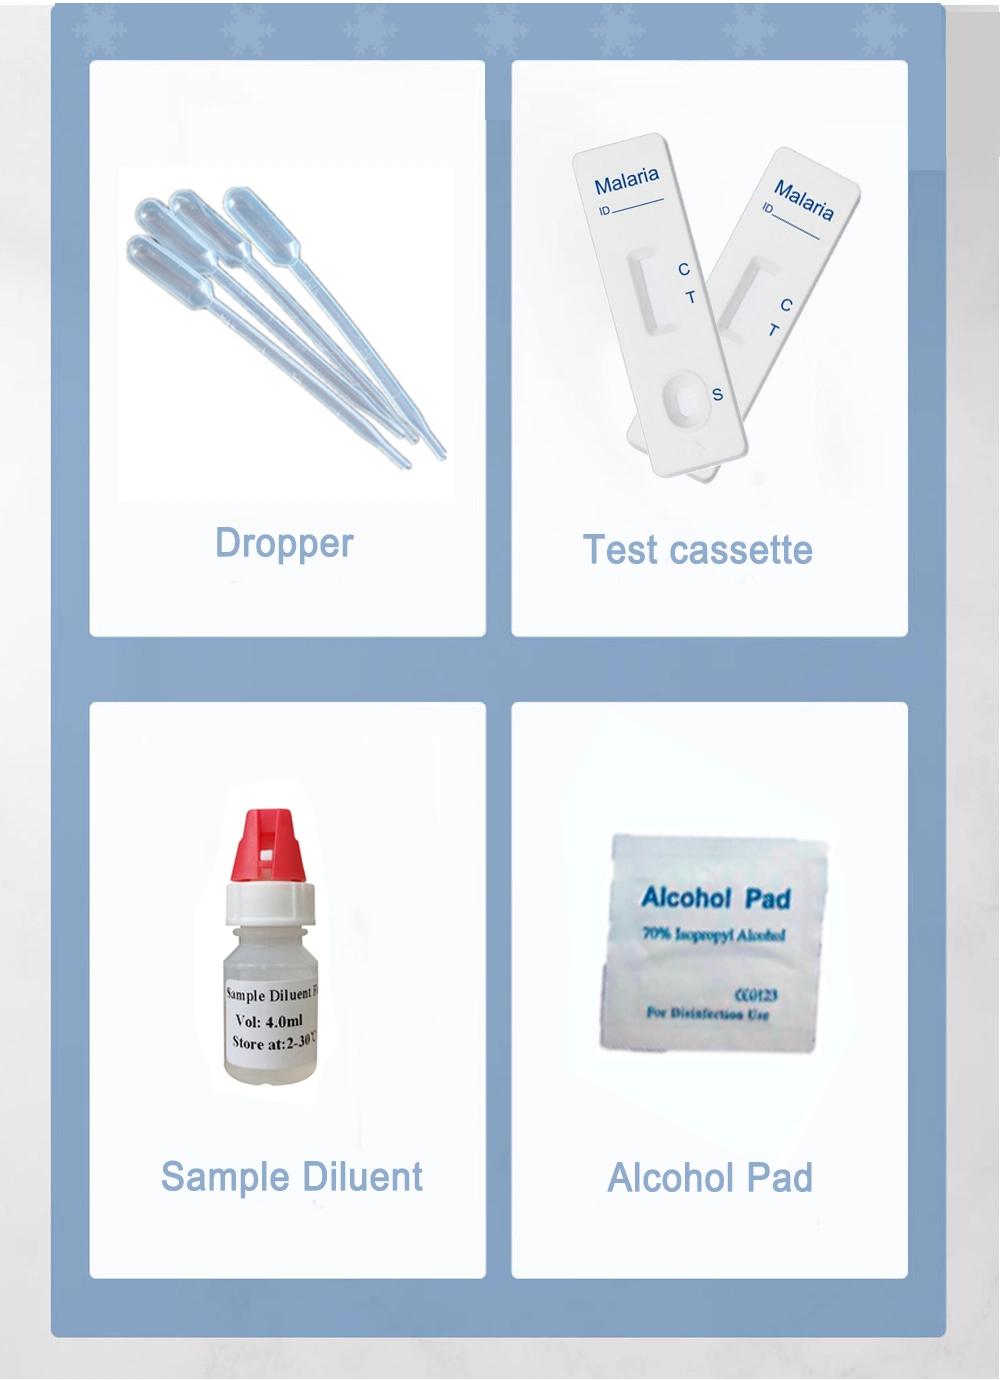 Rapid Home Test / Malaria Rapid Diagnostic Test Kits